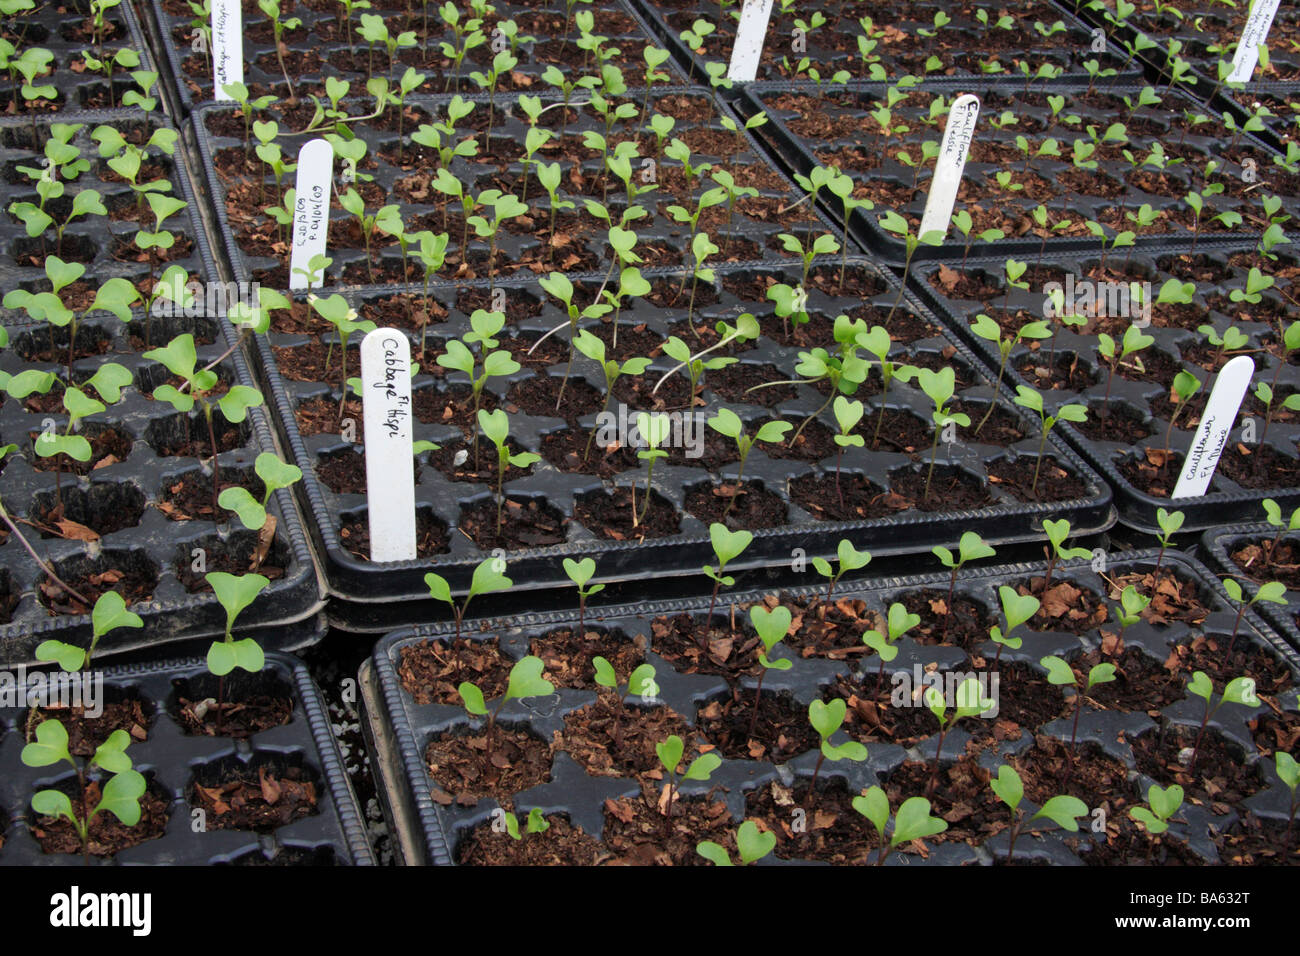 Trays of vegetable seedlings Stock Photo